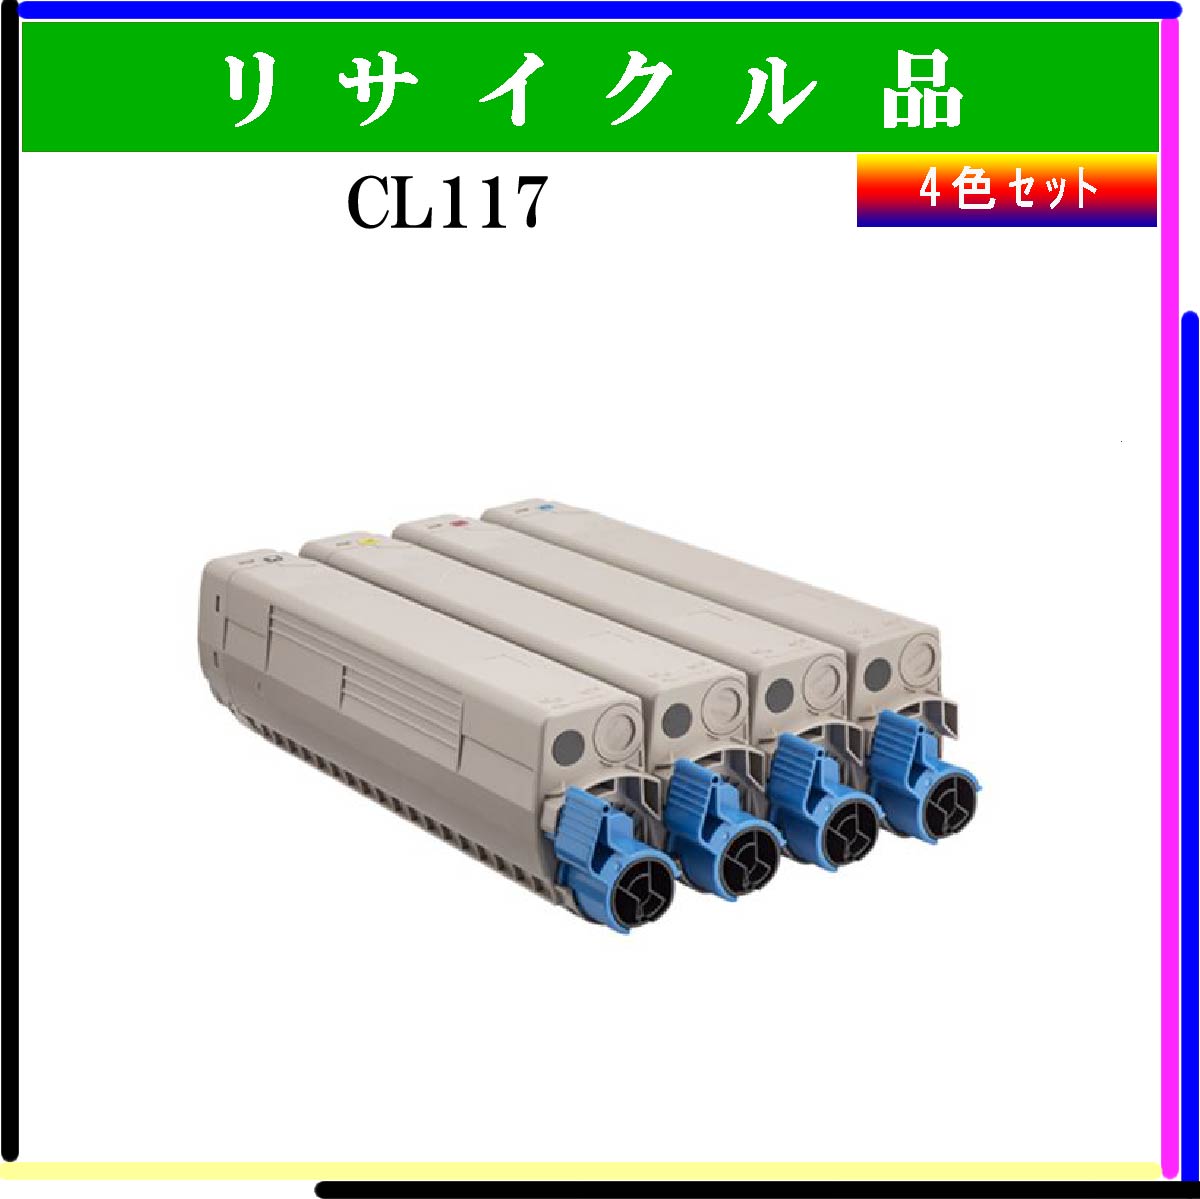 CL117 (4色ｾｯﾄ) - ウインドウを閉じる